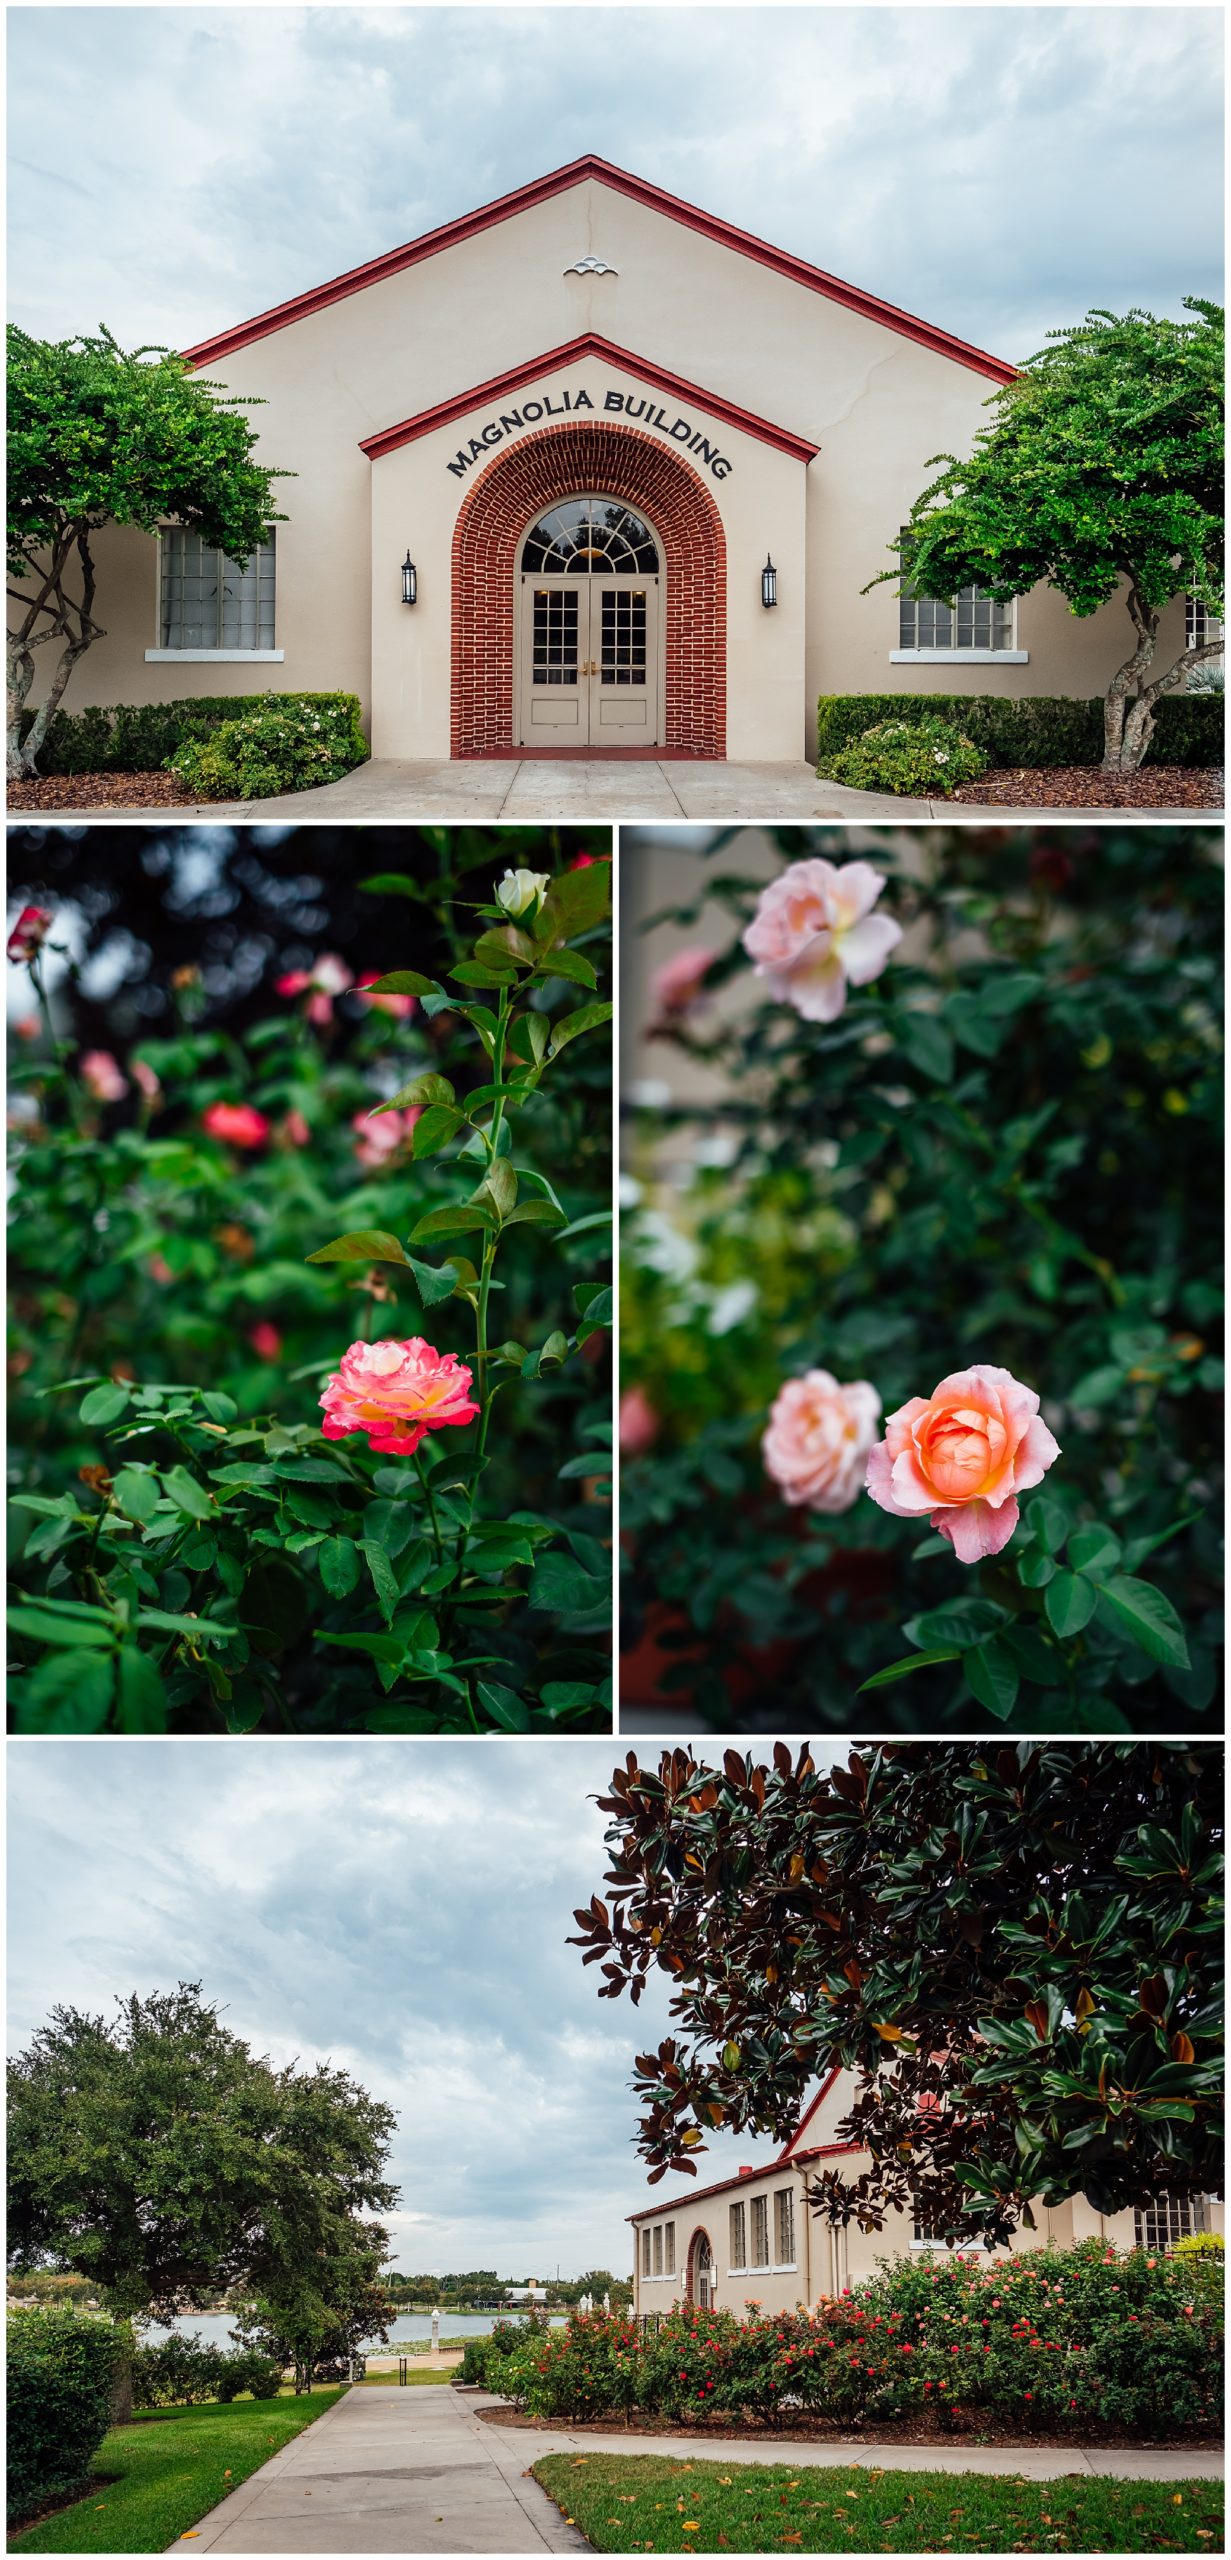 downtown-lakeland-wedding-terrace-hotel-mirror-lake-hollis-gardens-magnolia-building-rain_0001.jpg